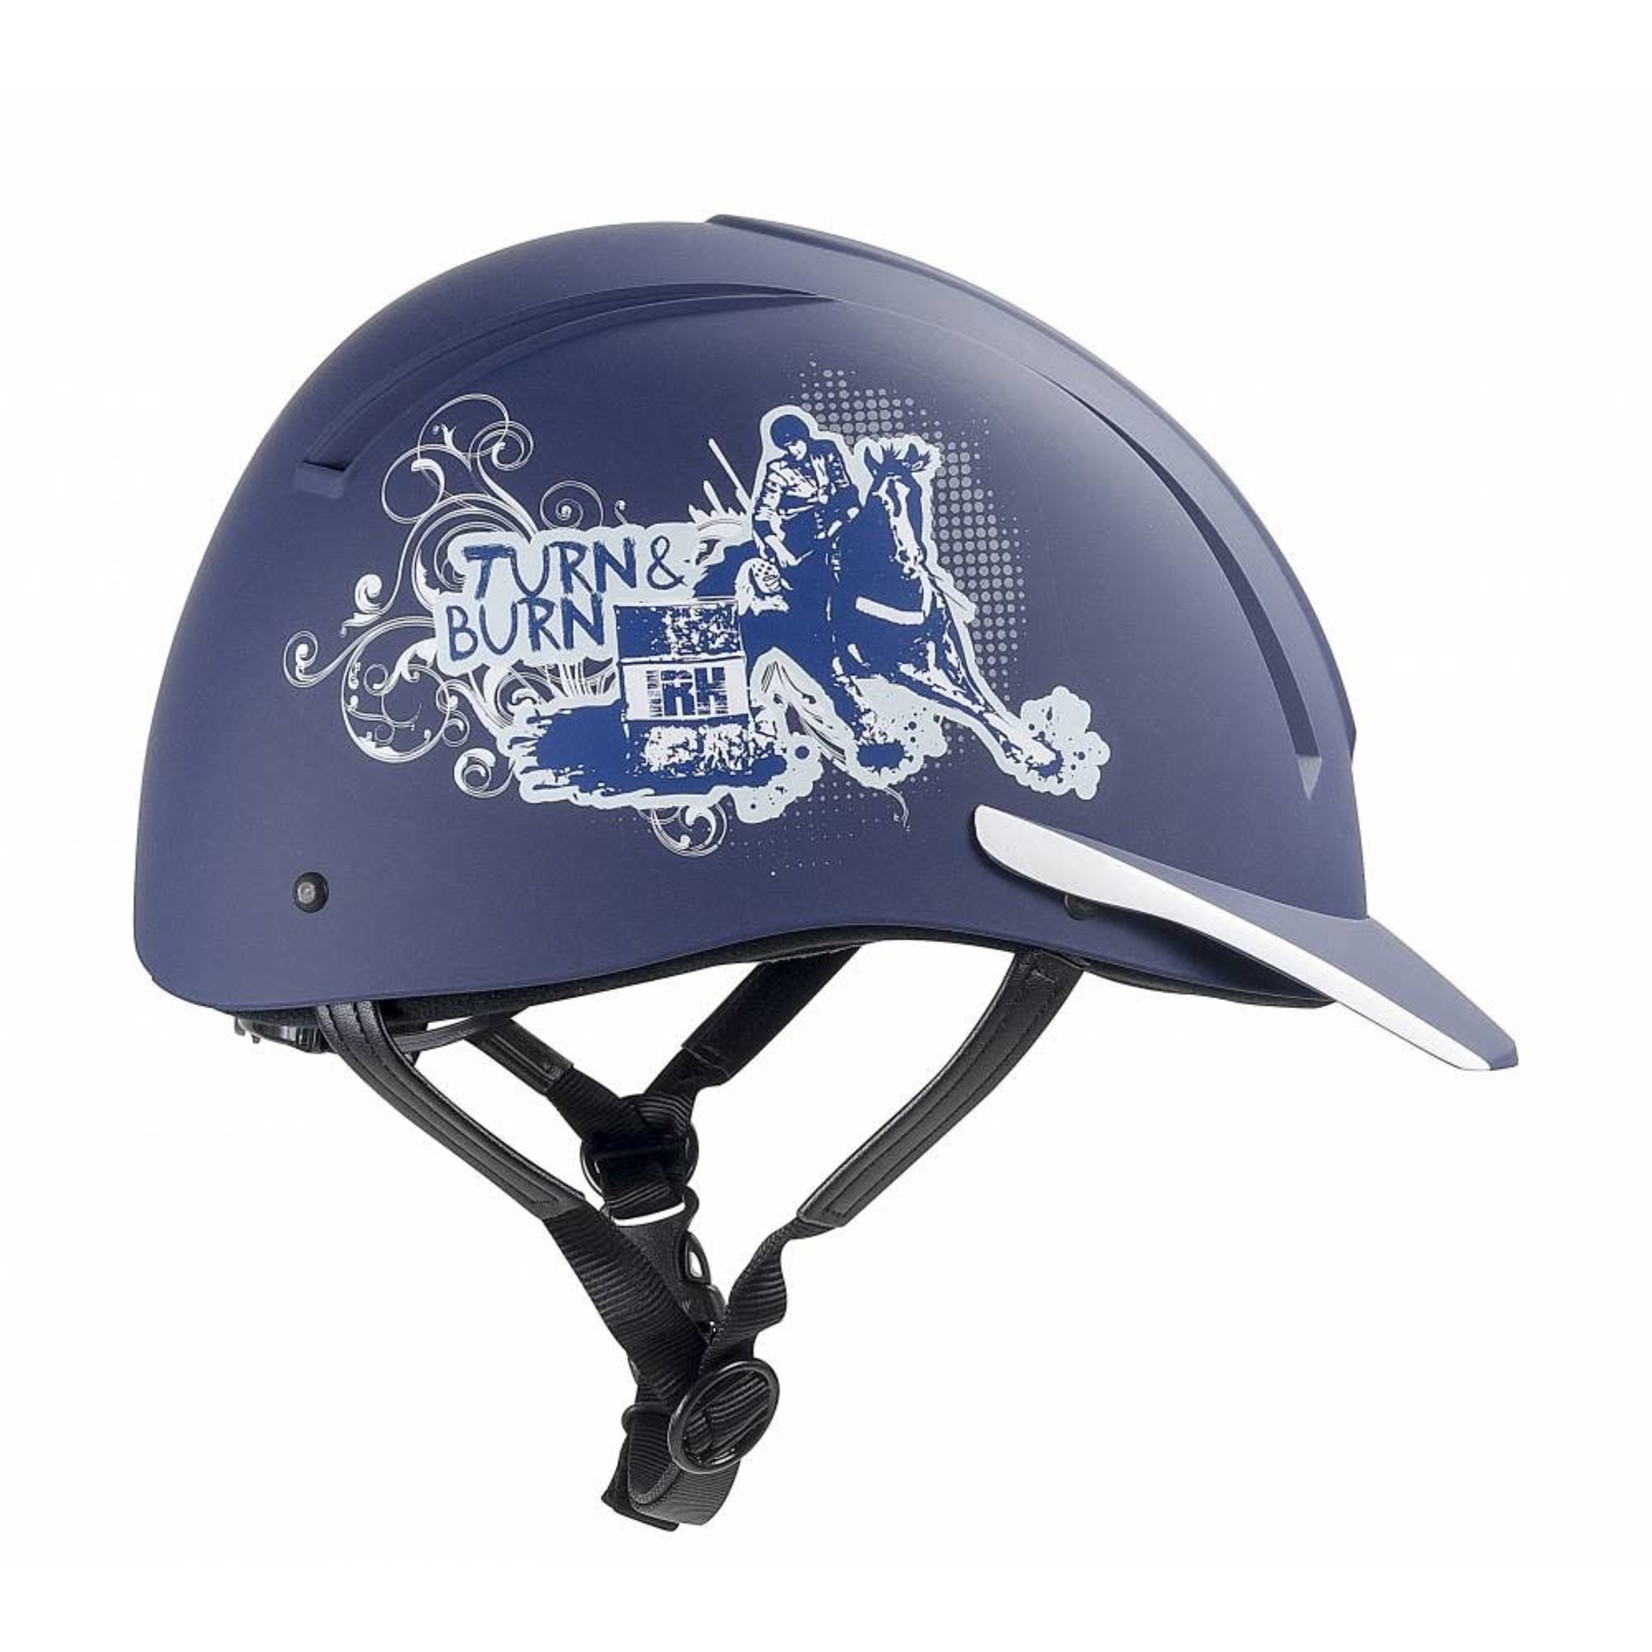 International Riding Helmets IRH Equi Pro II Helmet